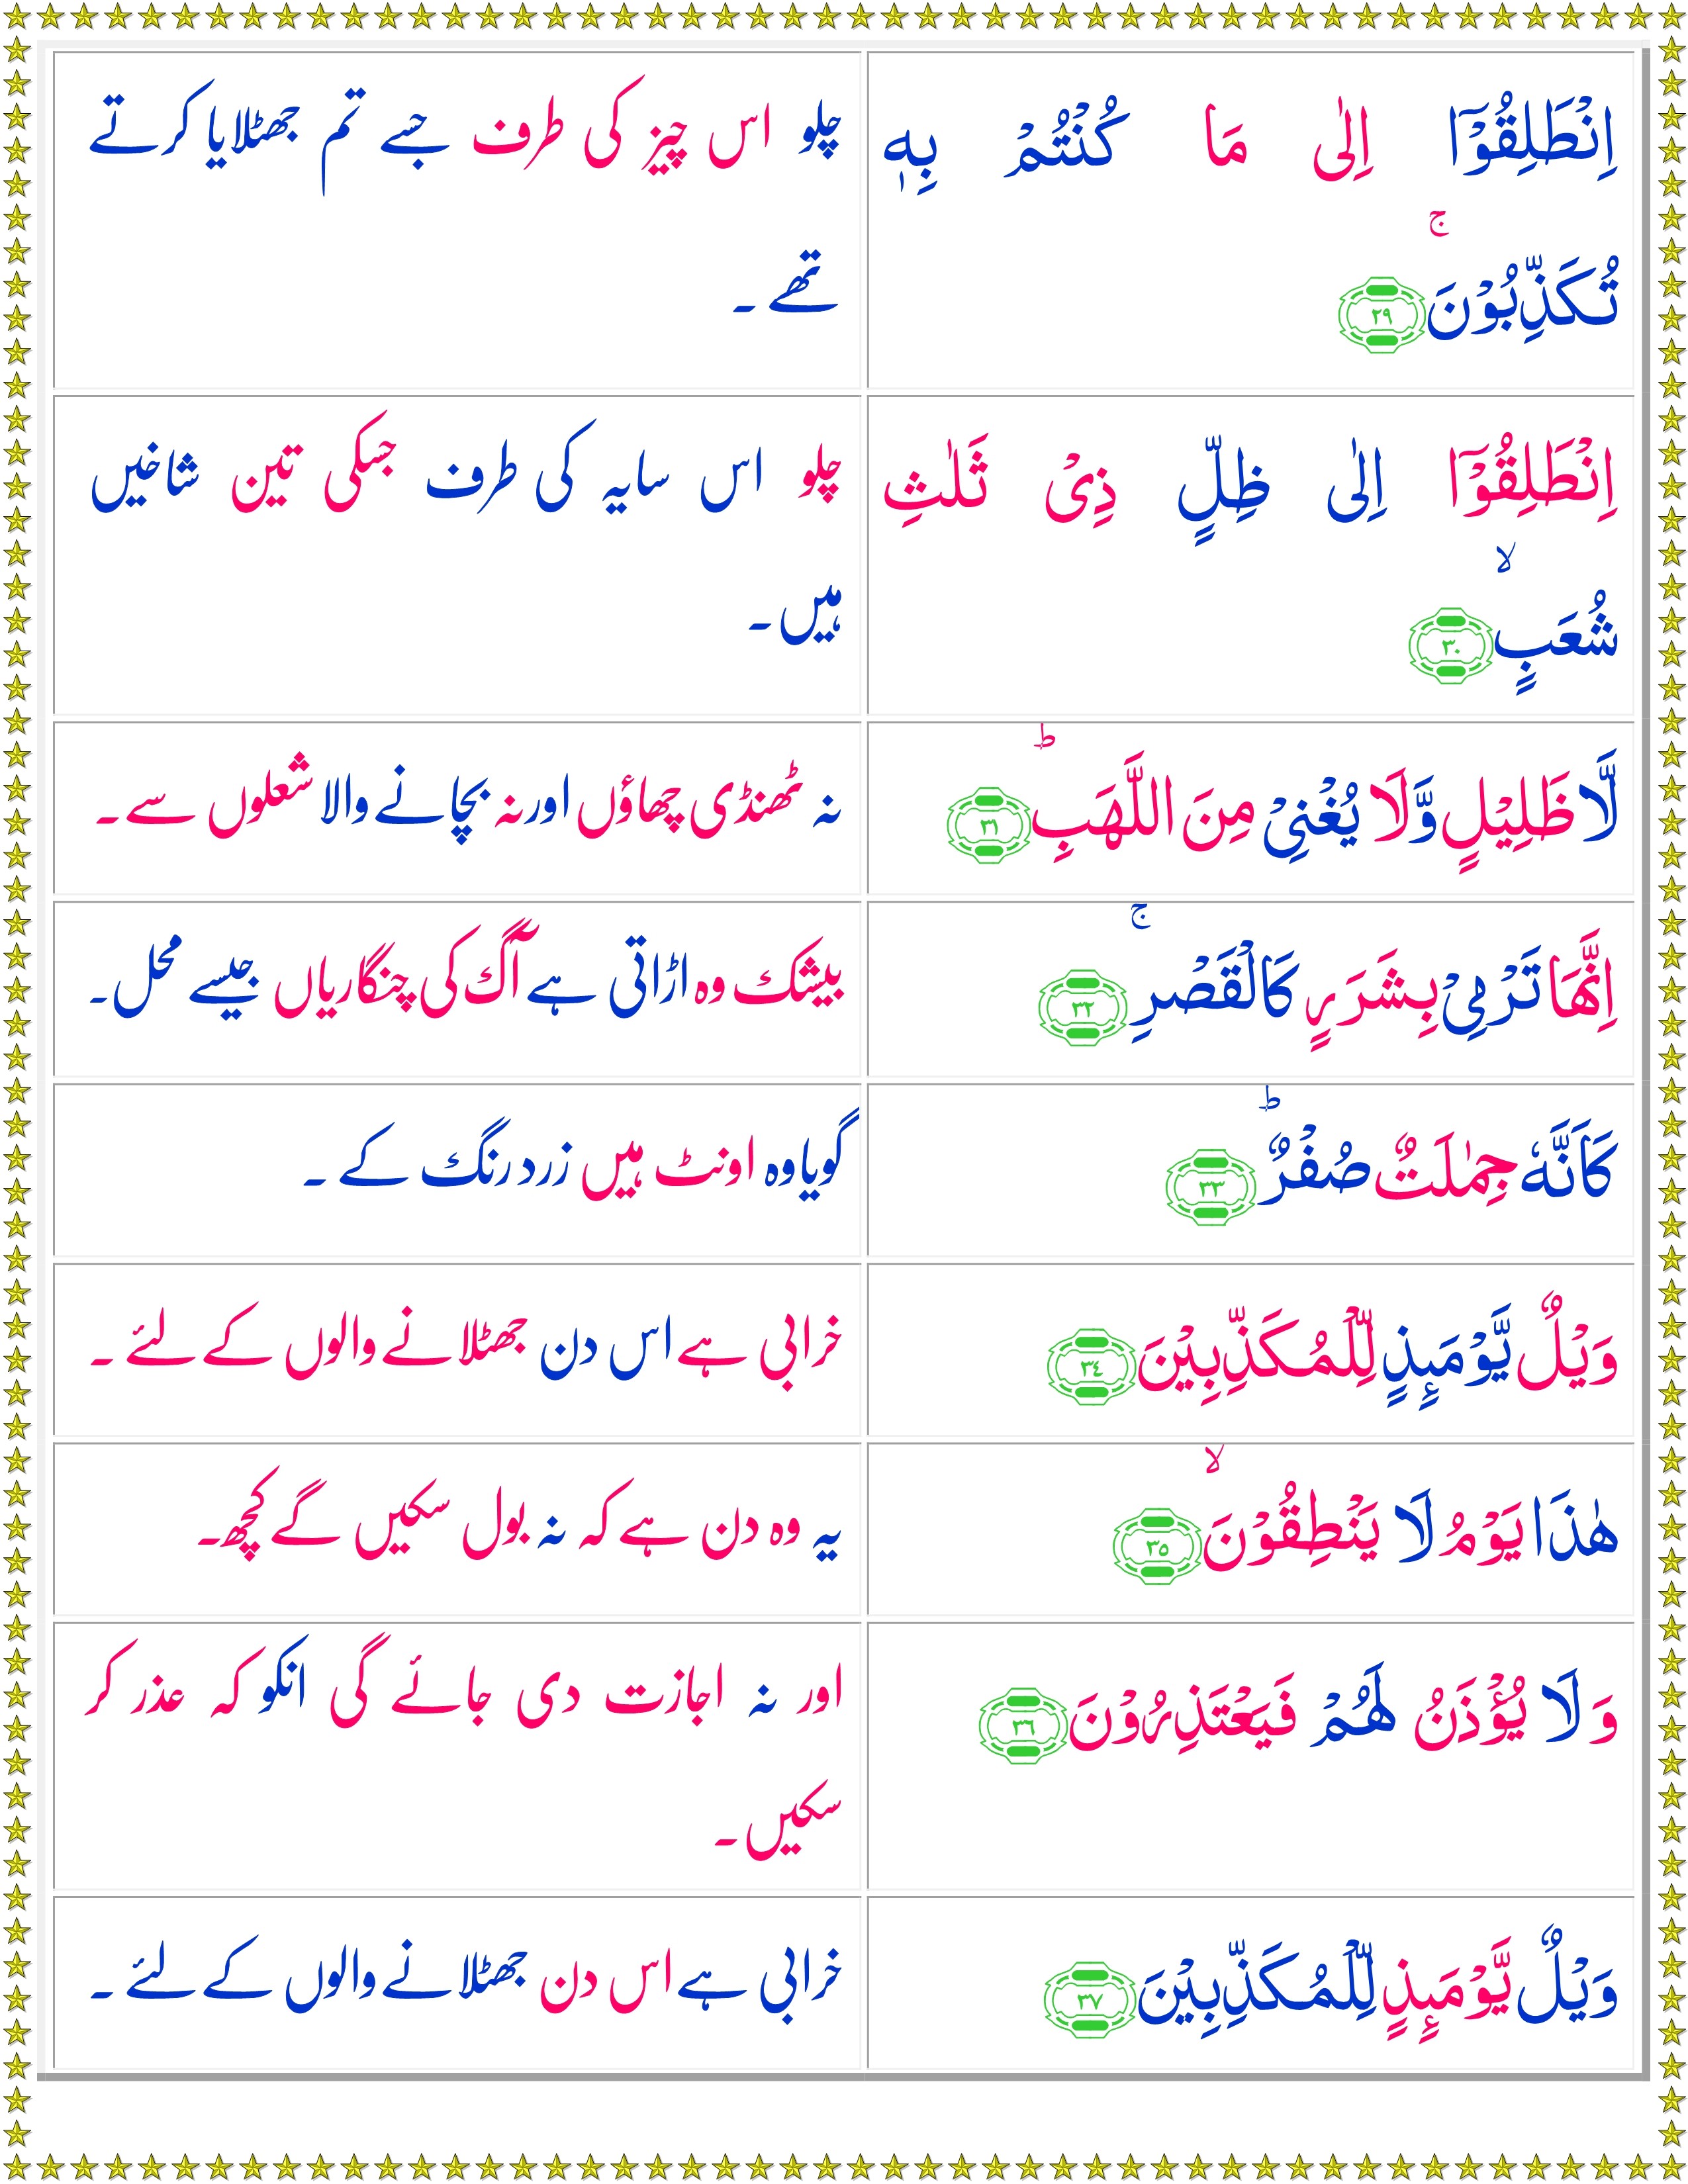 Surat Al Mursalat - Quran surah Al Mursalat 34 (QS 77: 34) in arabic